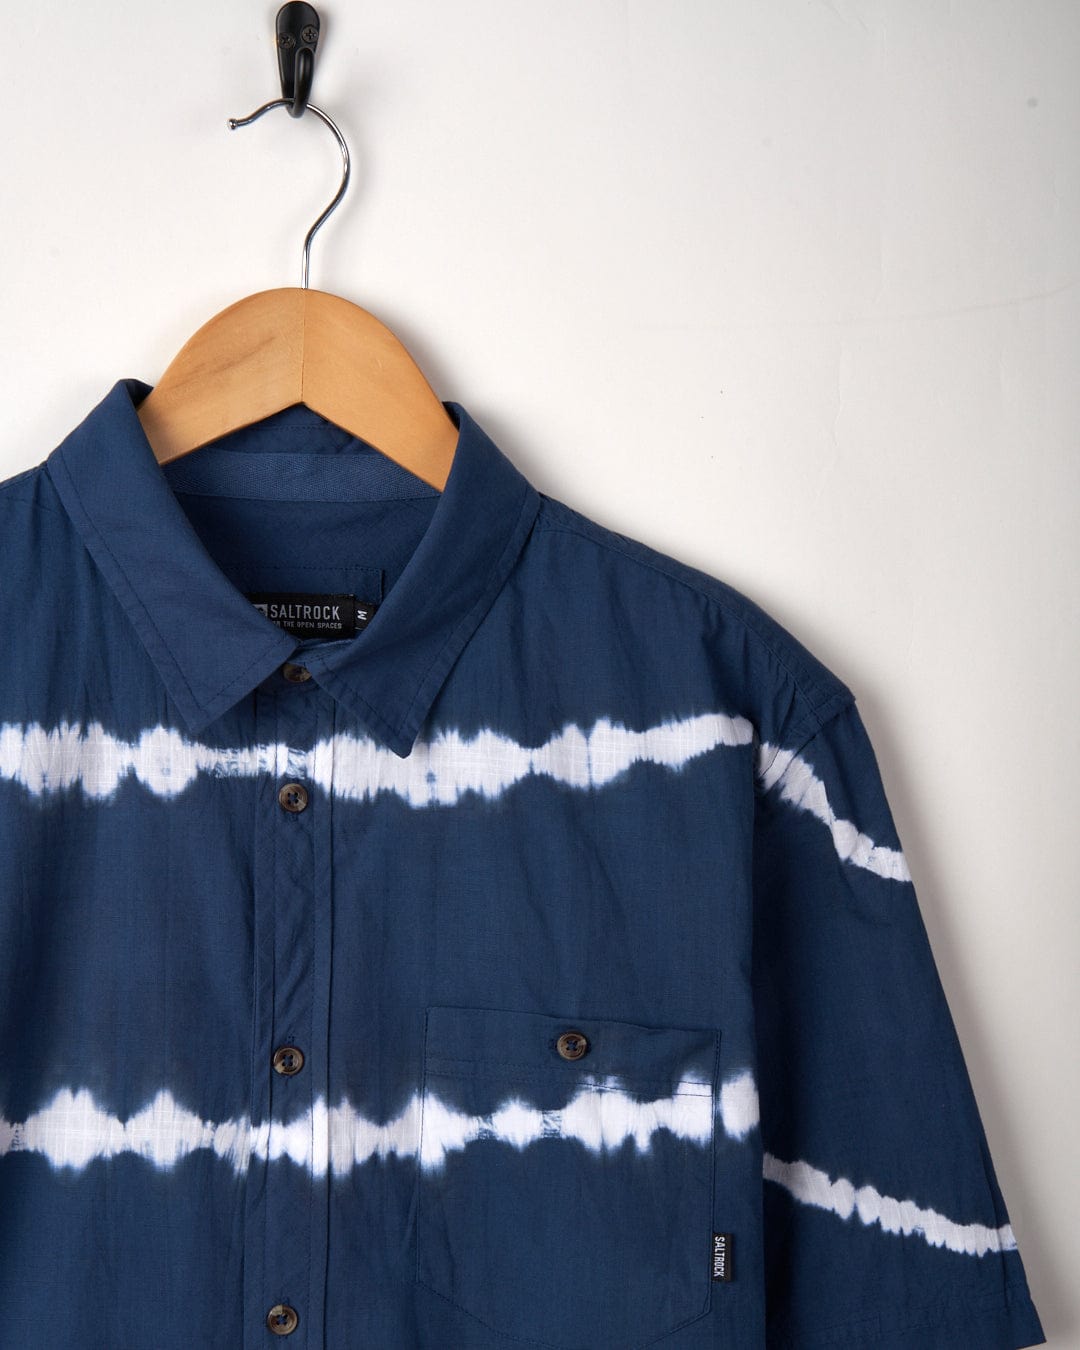 Ocean - Mens Tie Dye Shirt - Blue by Saltrock on a wooden hanger against a plain background.